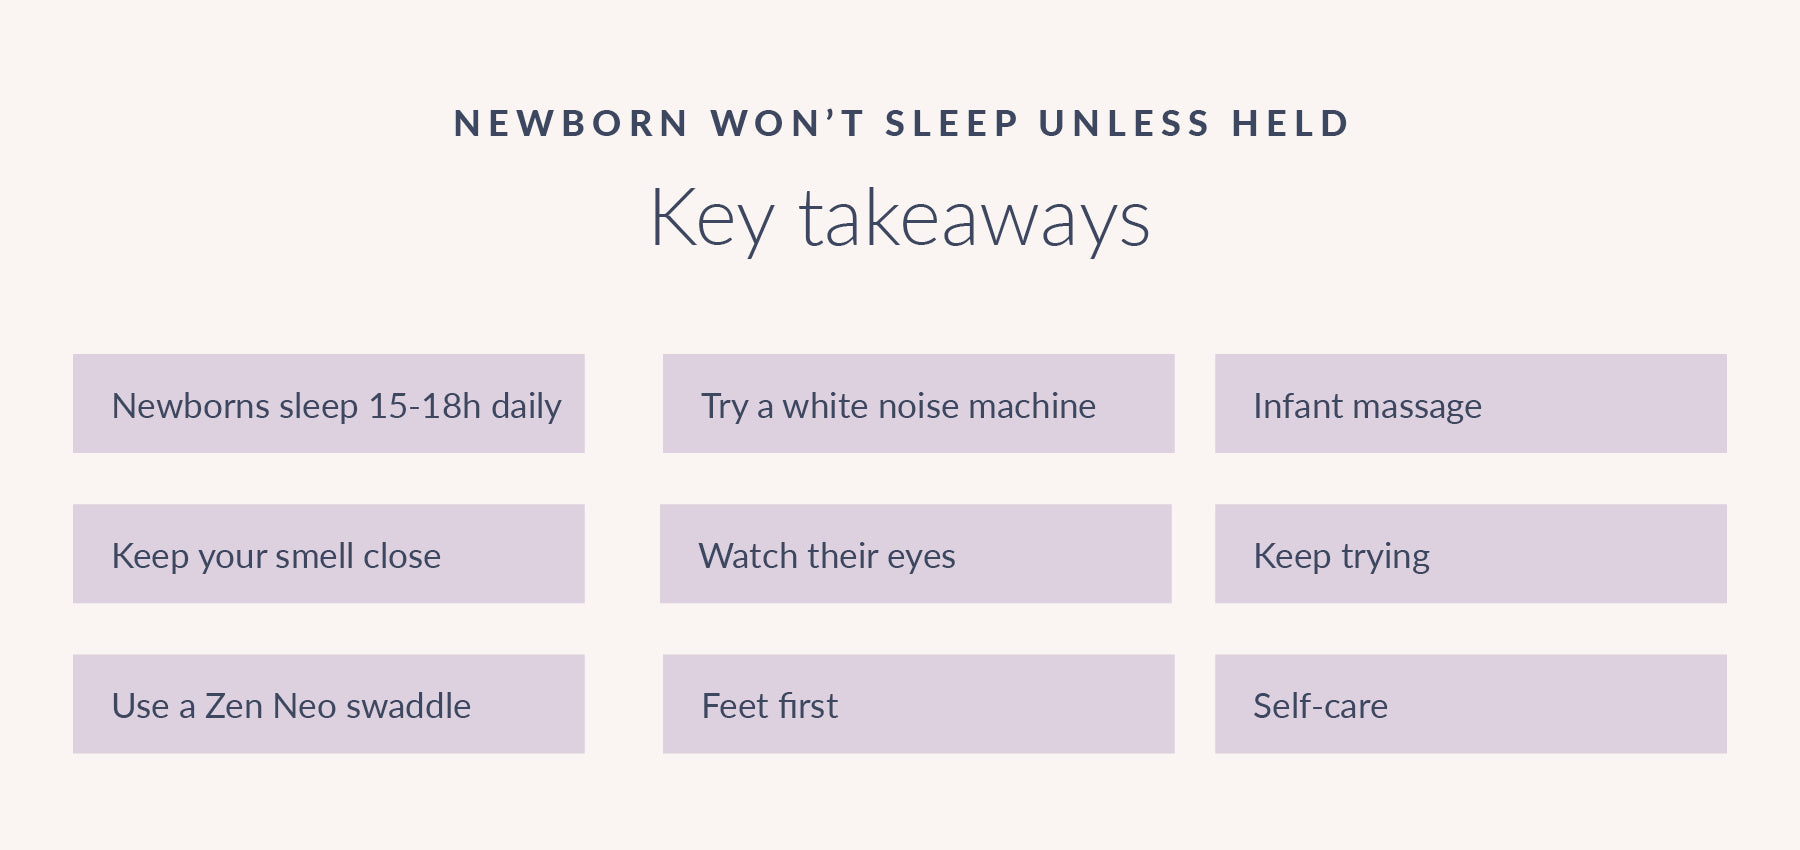 newborn wont sleep unless held, key takeaways